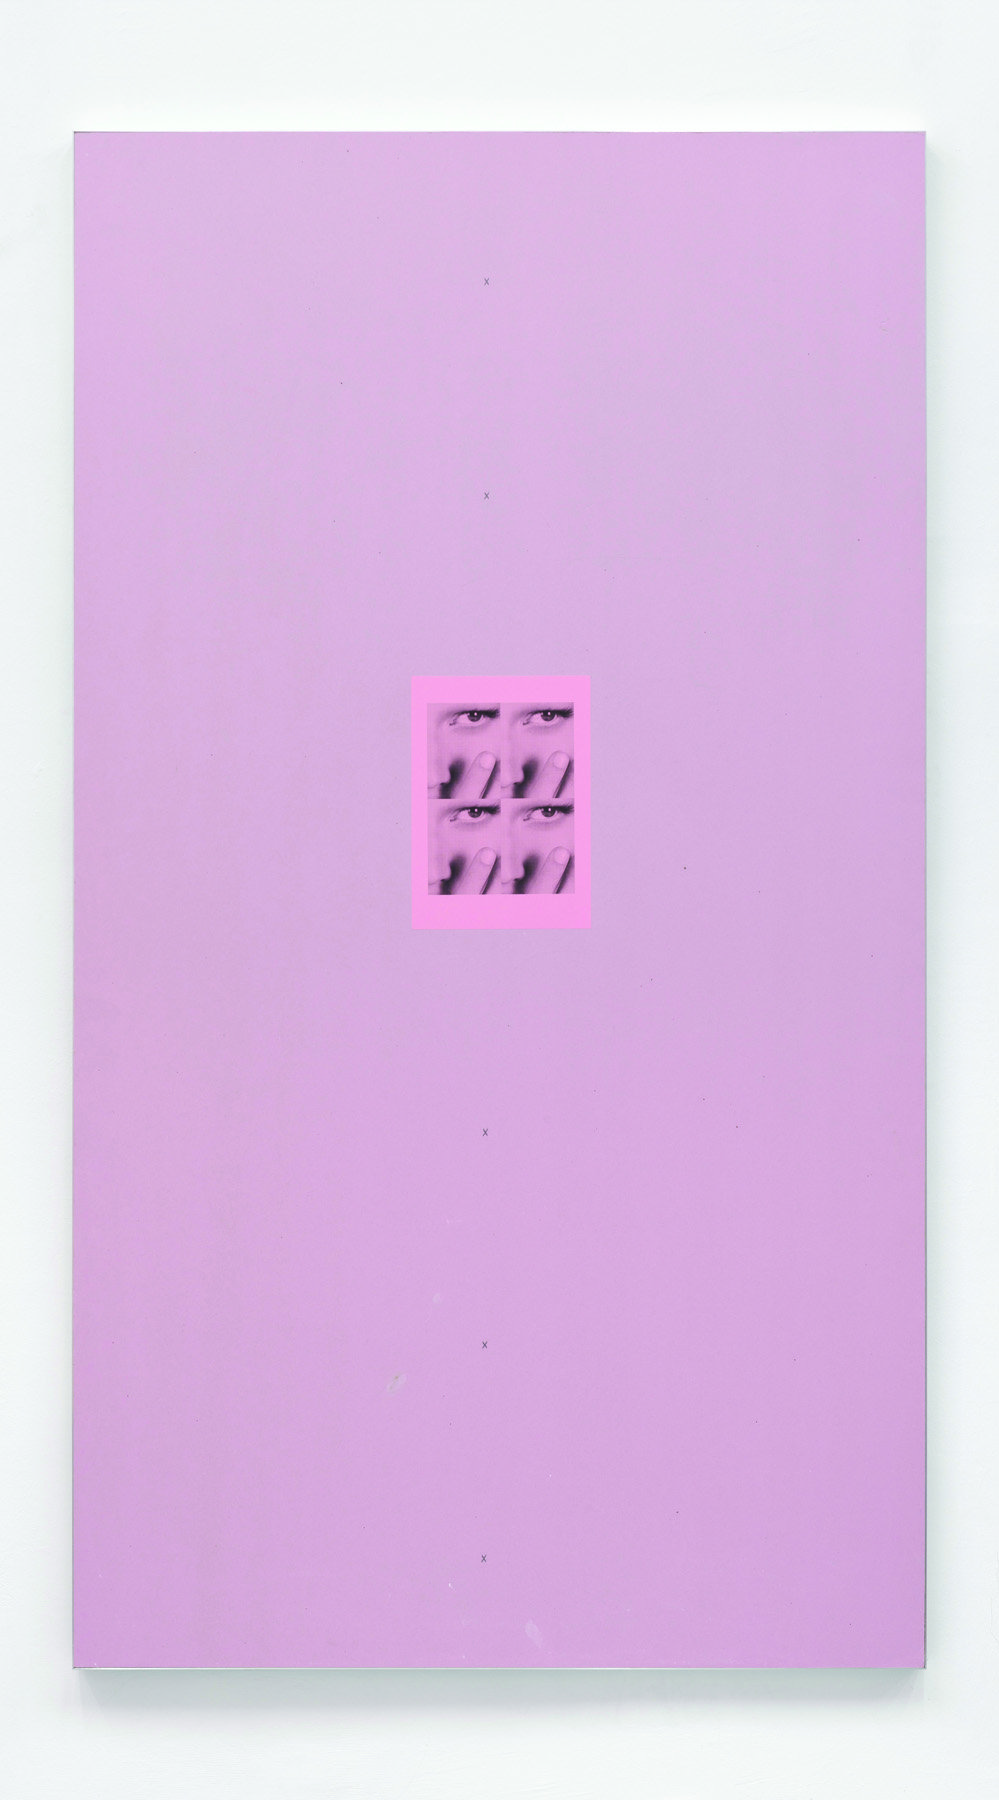 Nick OberthalerUntitled (Negative Outlook I), 2015Xerox on gypsum board180 x 100 cm